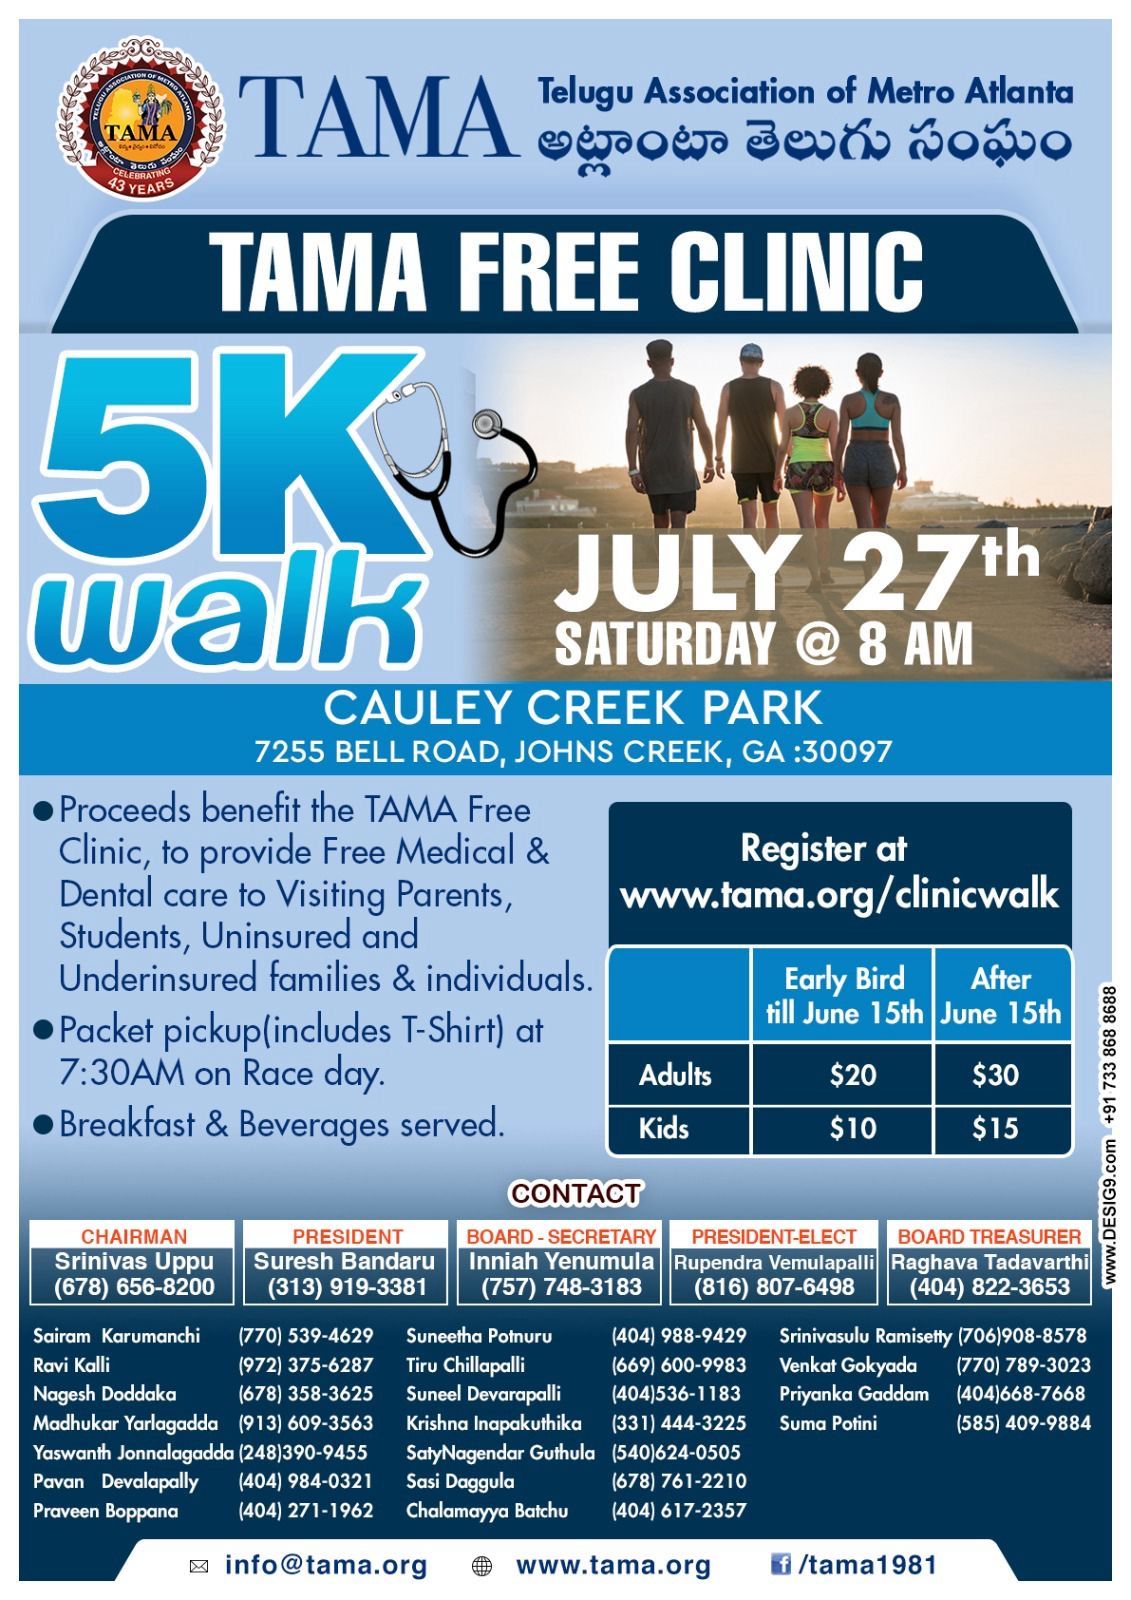 TAMA FREE CLINIC 5K WALK 